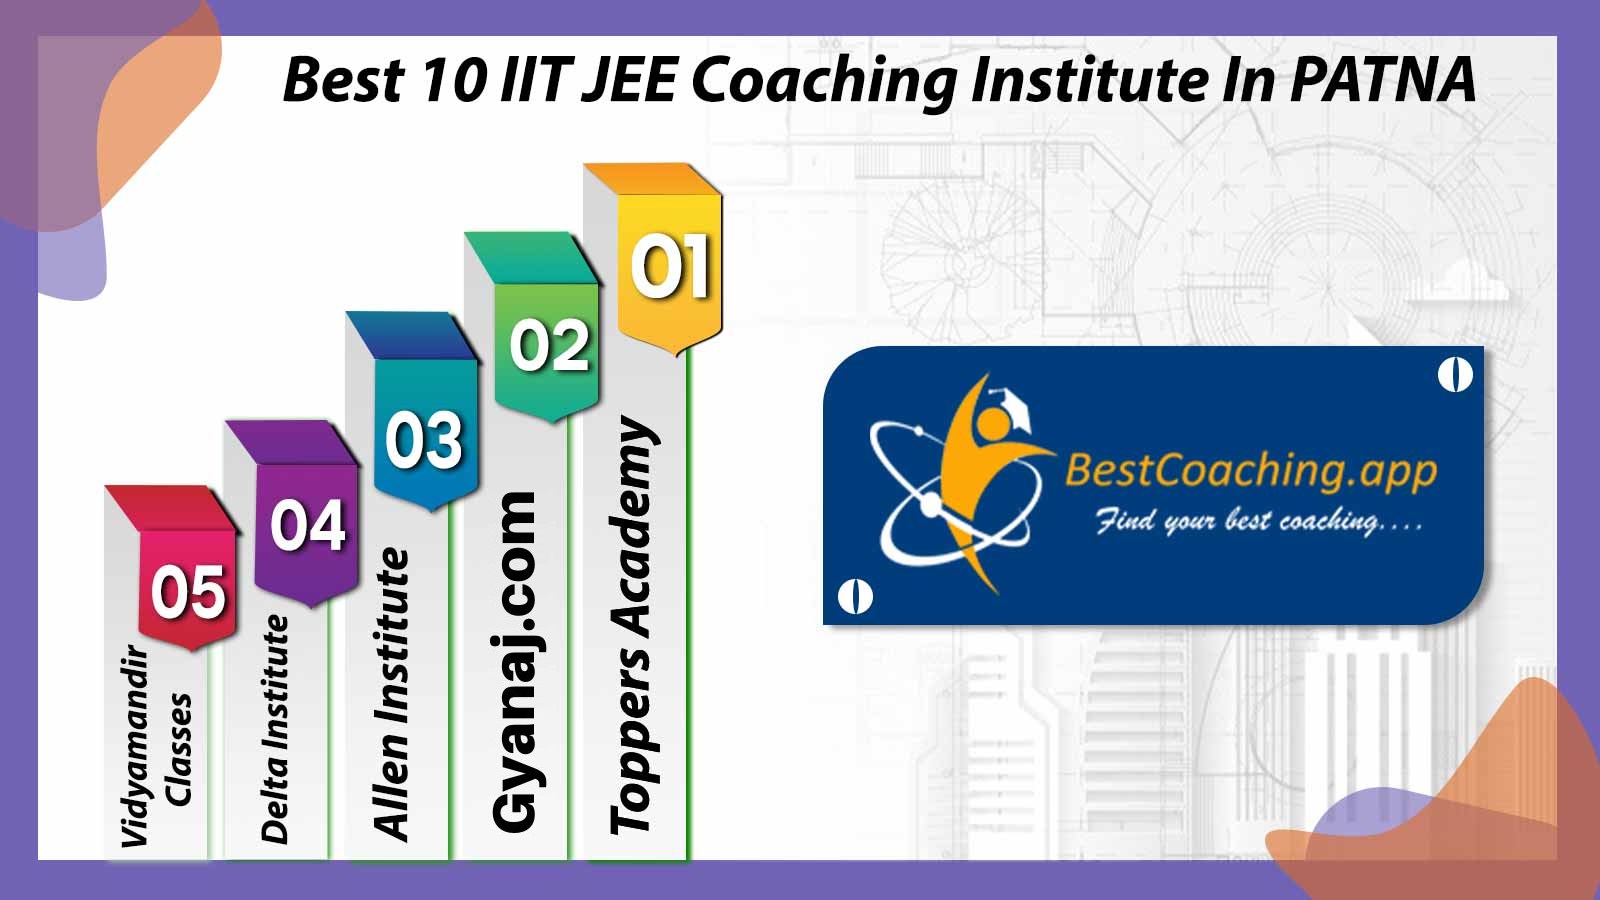 BEST 10 IIT JEE COACHING INSTITUTE IN PATNA